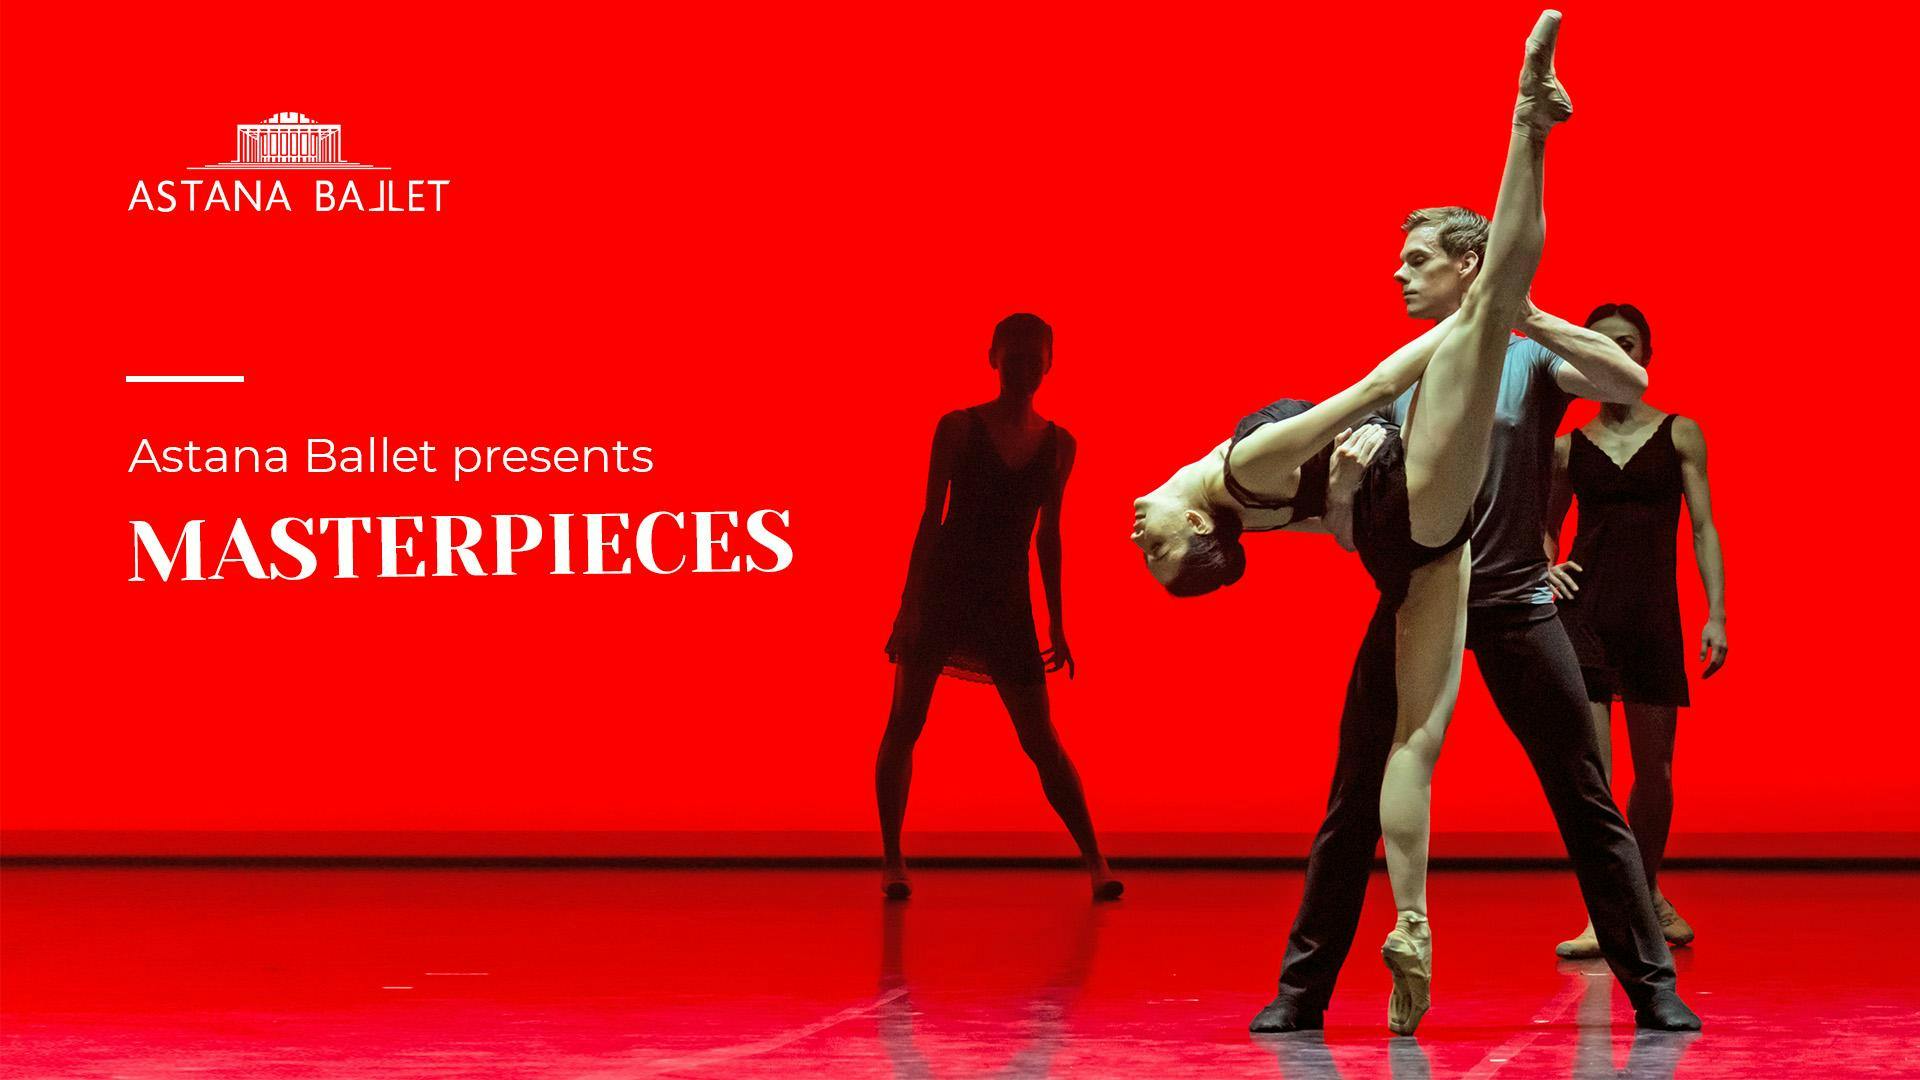 Astana Ballet presents Masterpieces